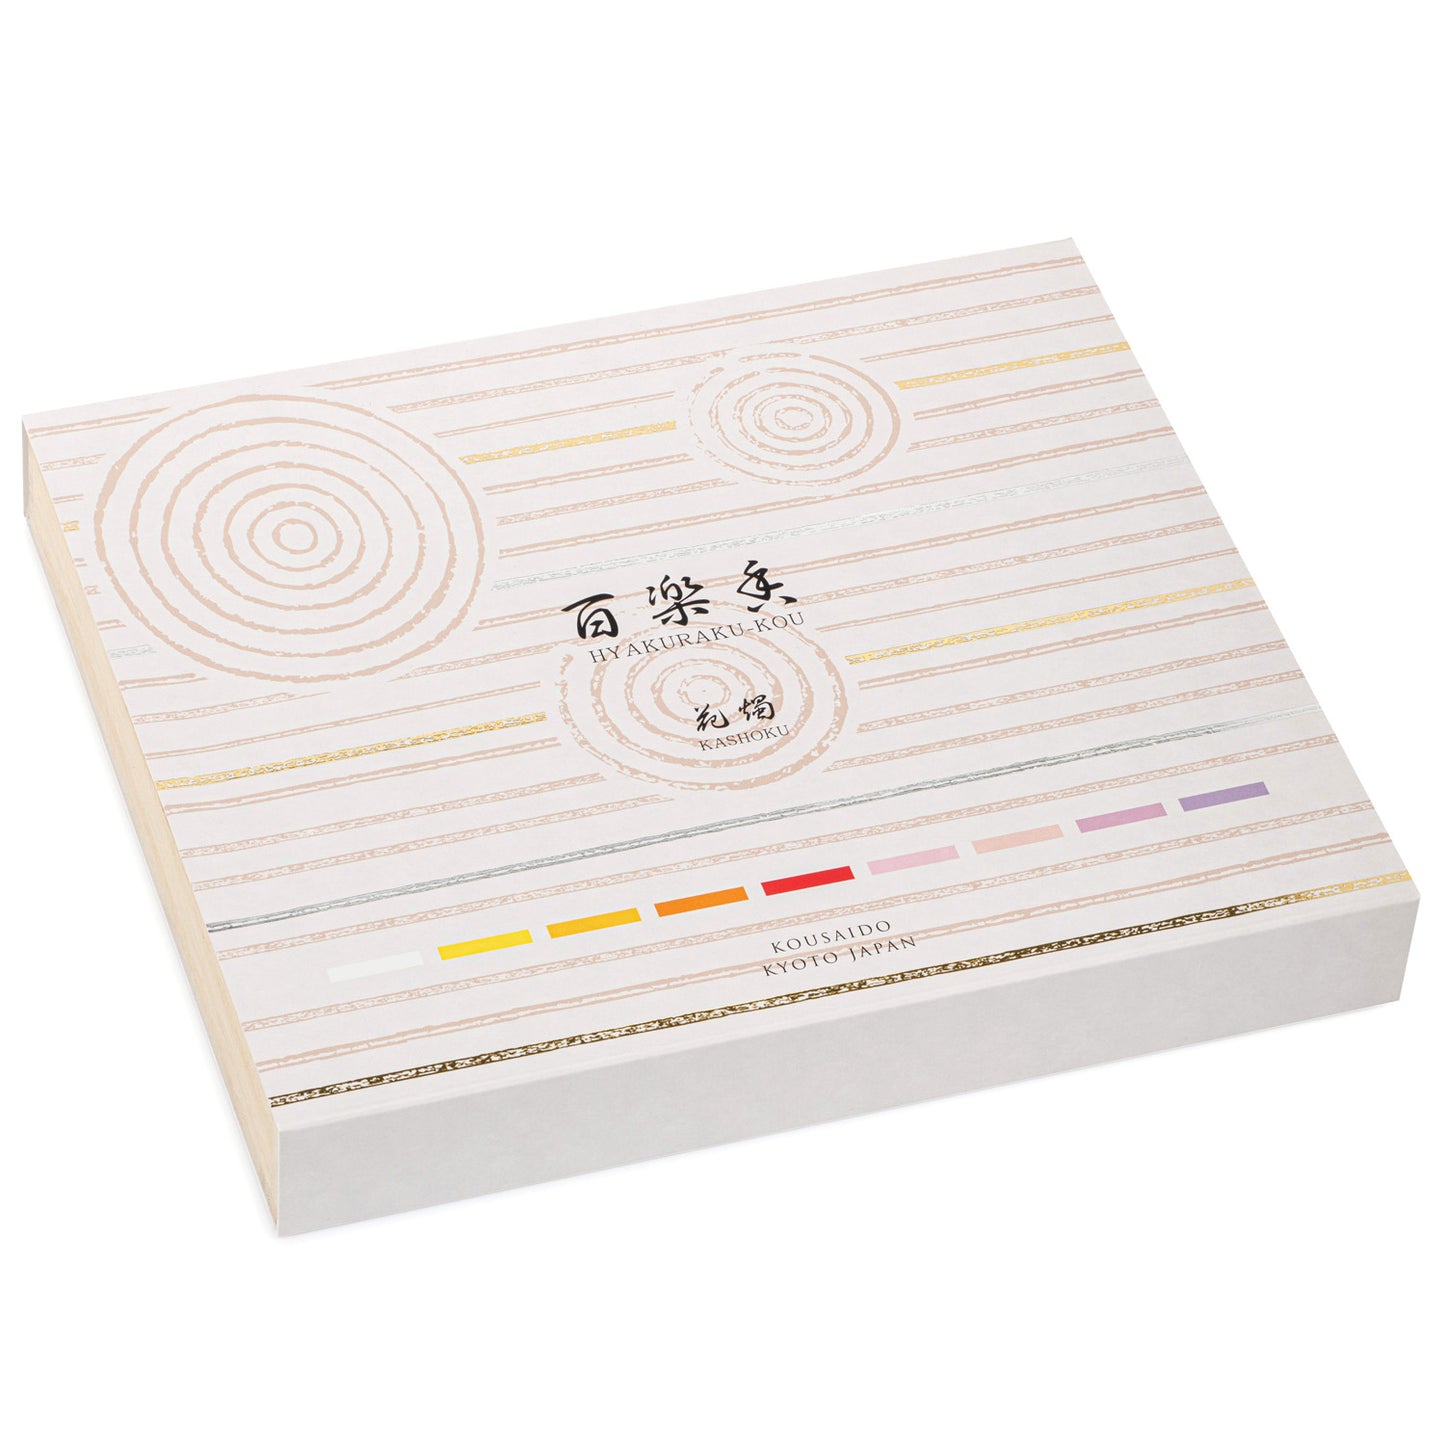 Kashoku Organic Japanese Incense Gift Set